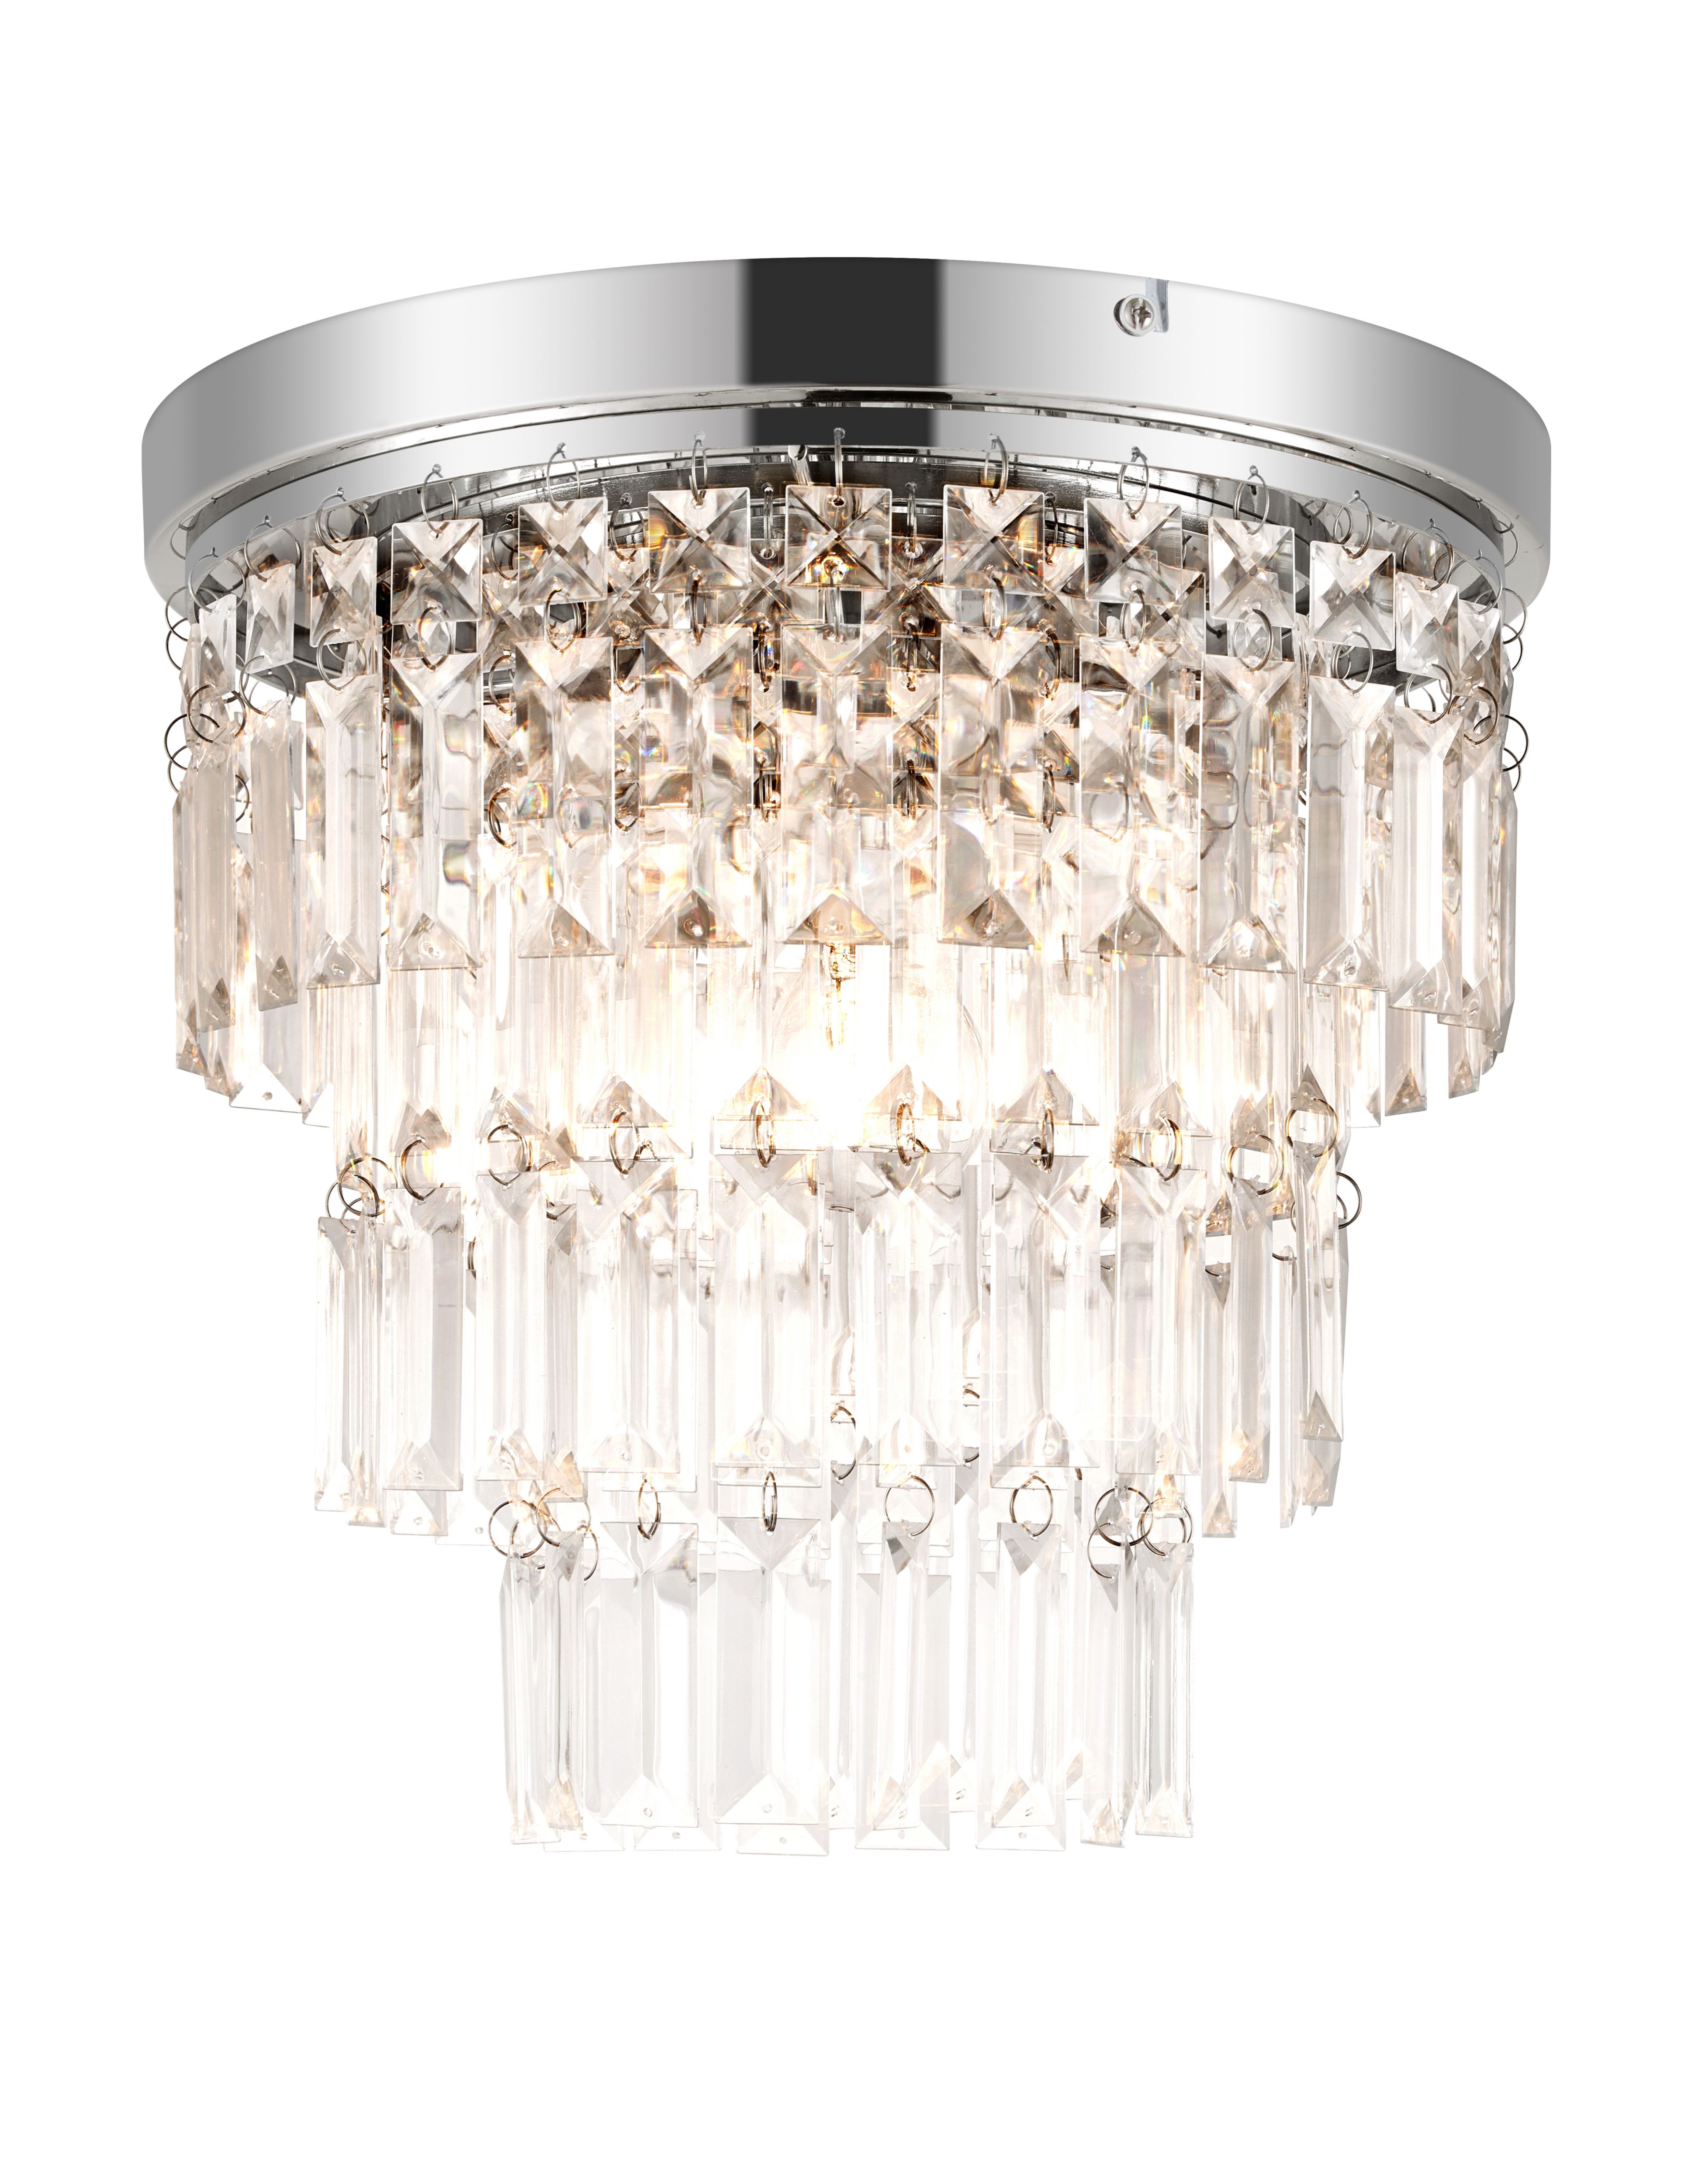 GoodHome Metal & plastic LED Chandelier Ceiling light